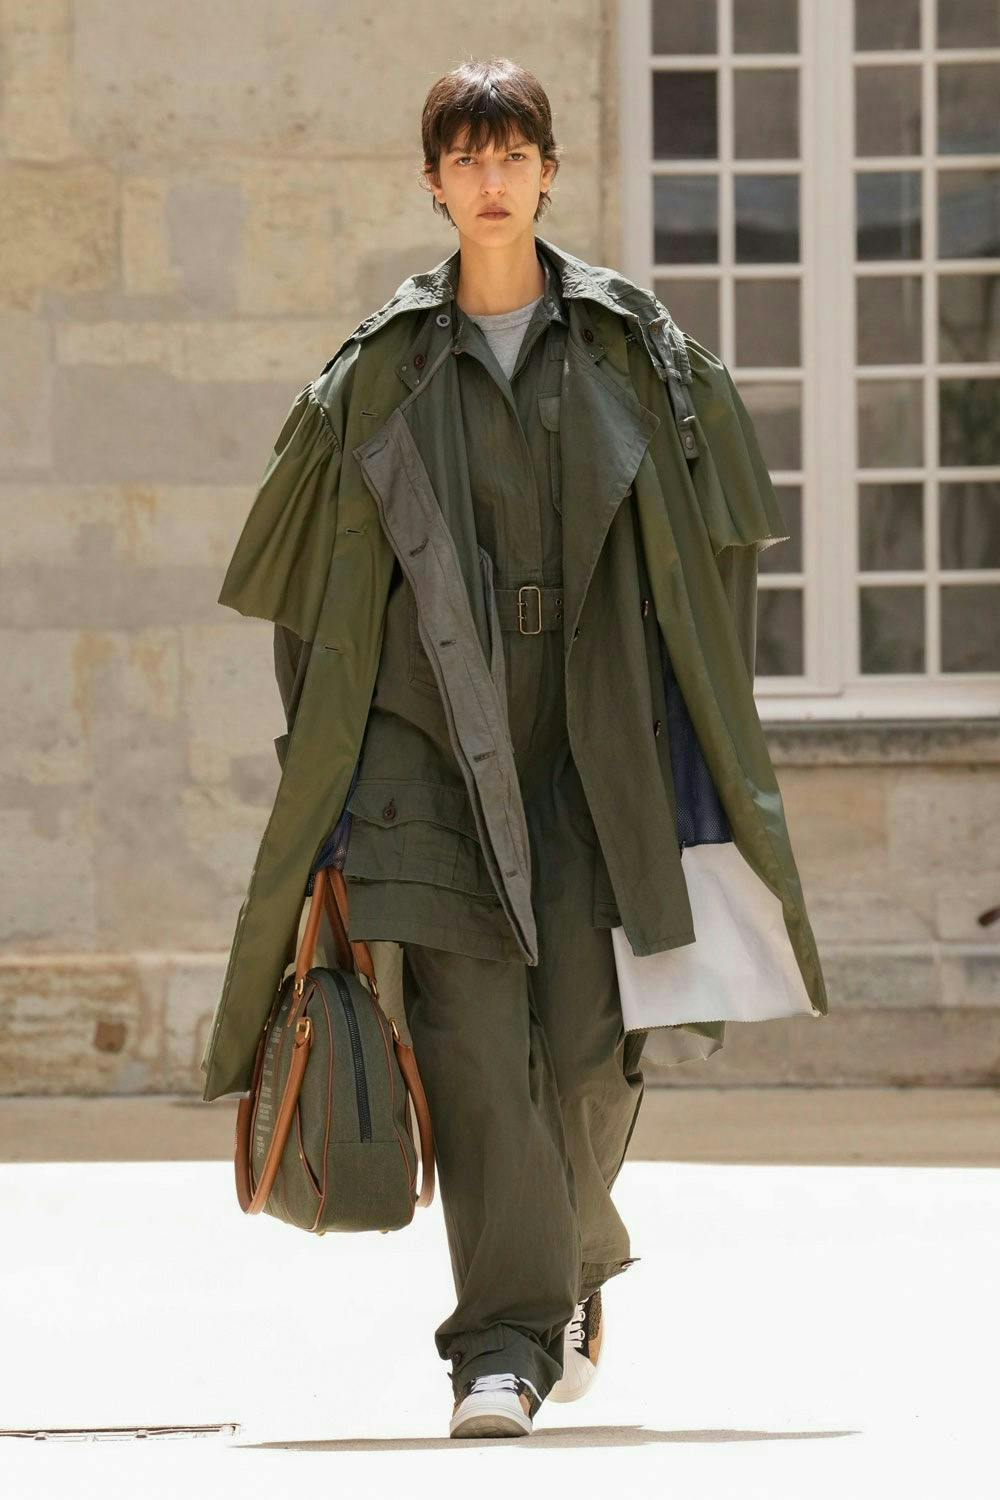 clothing coat fashion adult male man person bag handbag overcoat